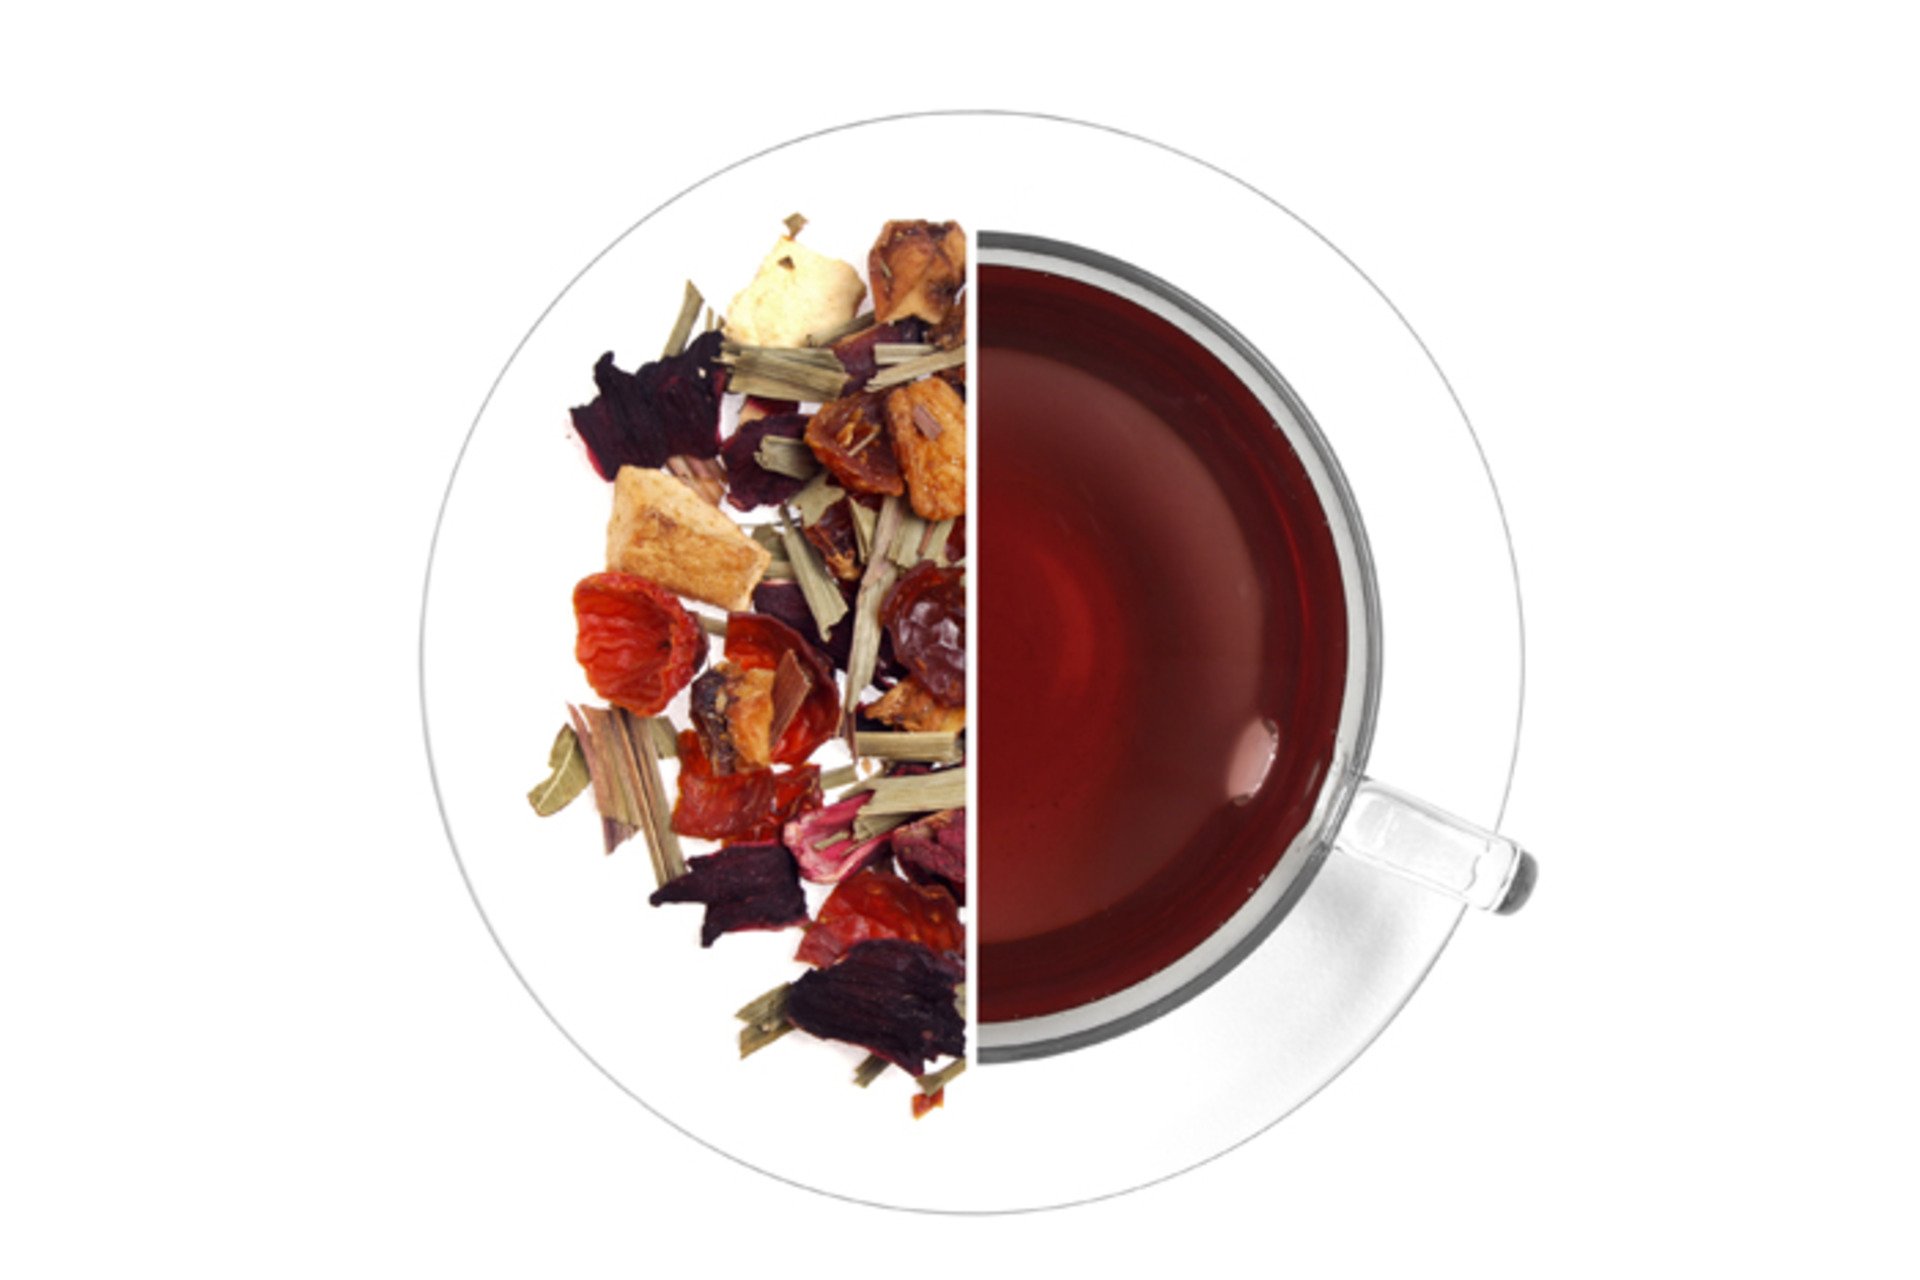 Oxalis čaj Brusnica - jahoda 80 g